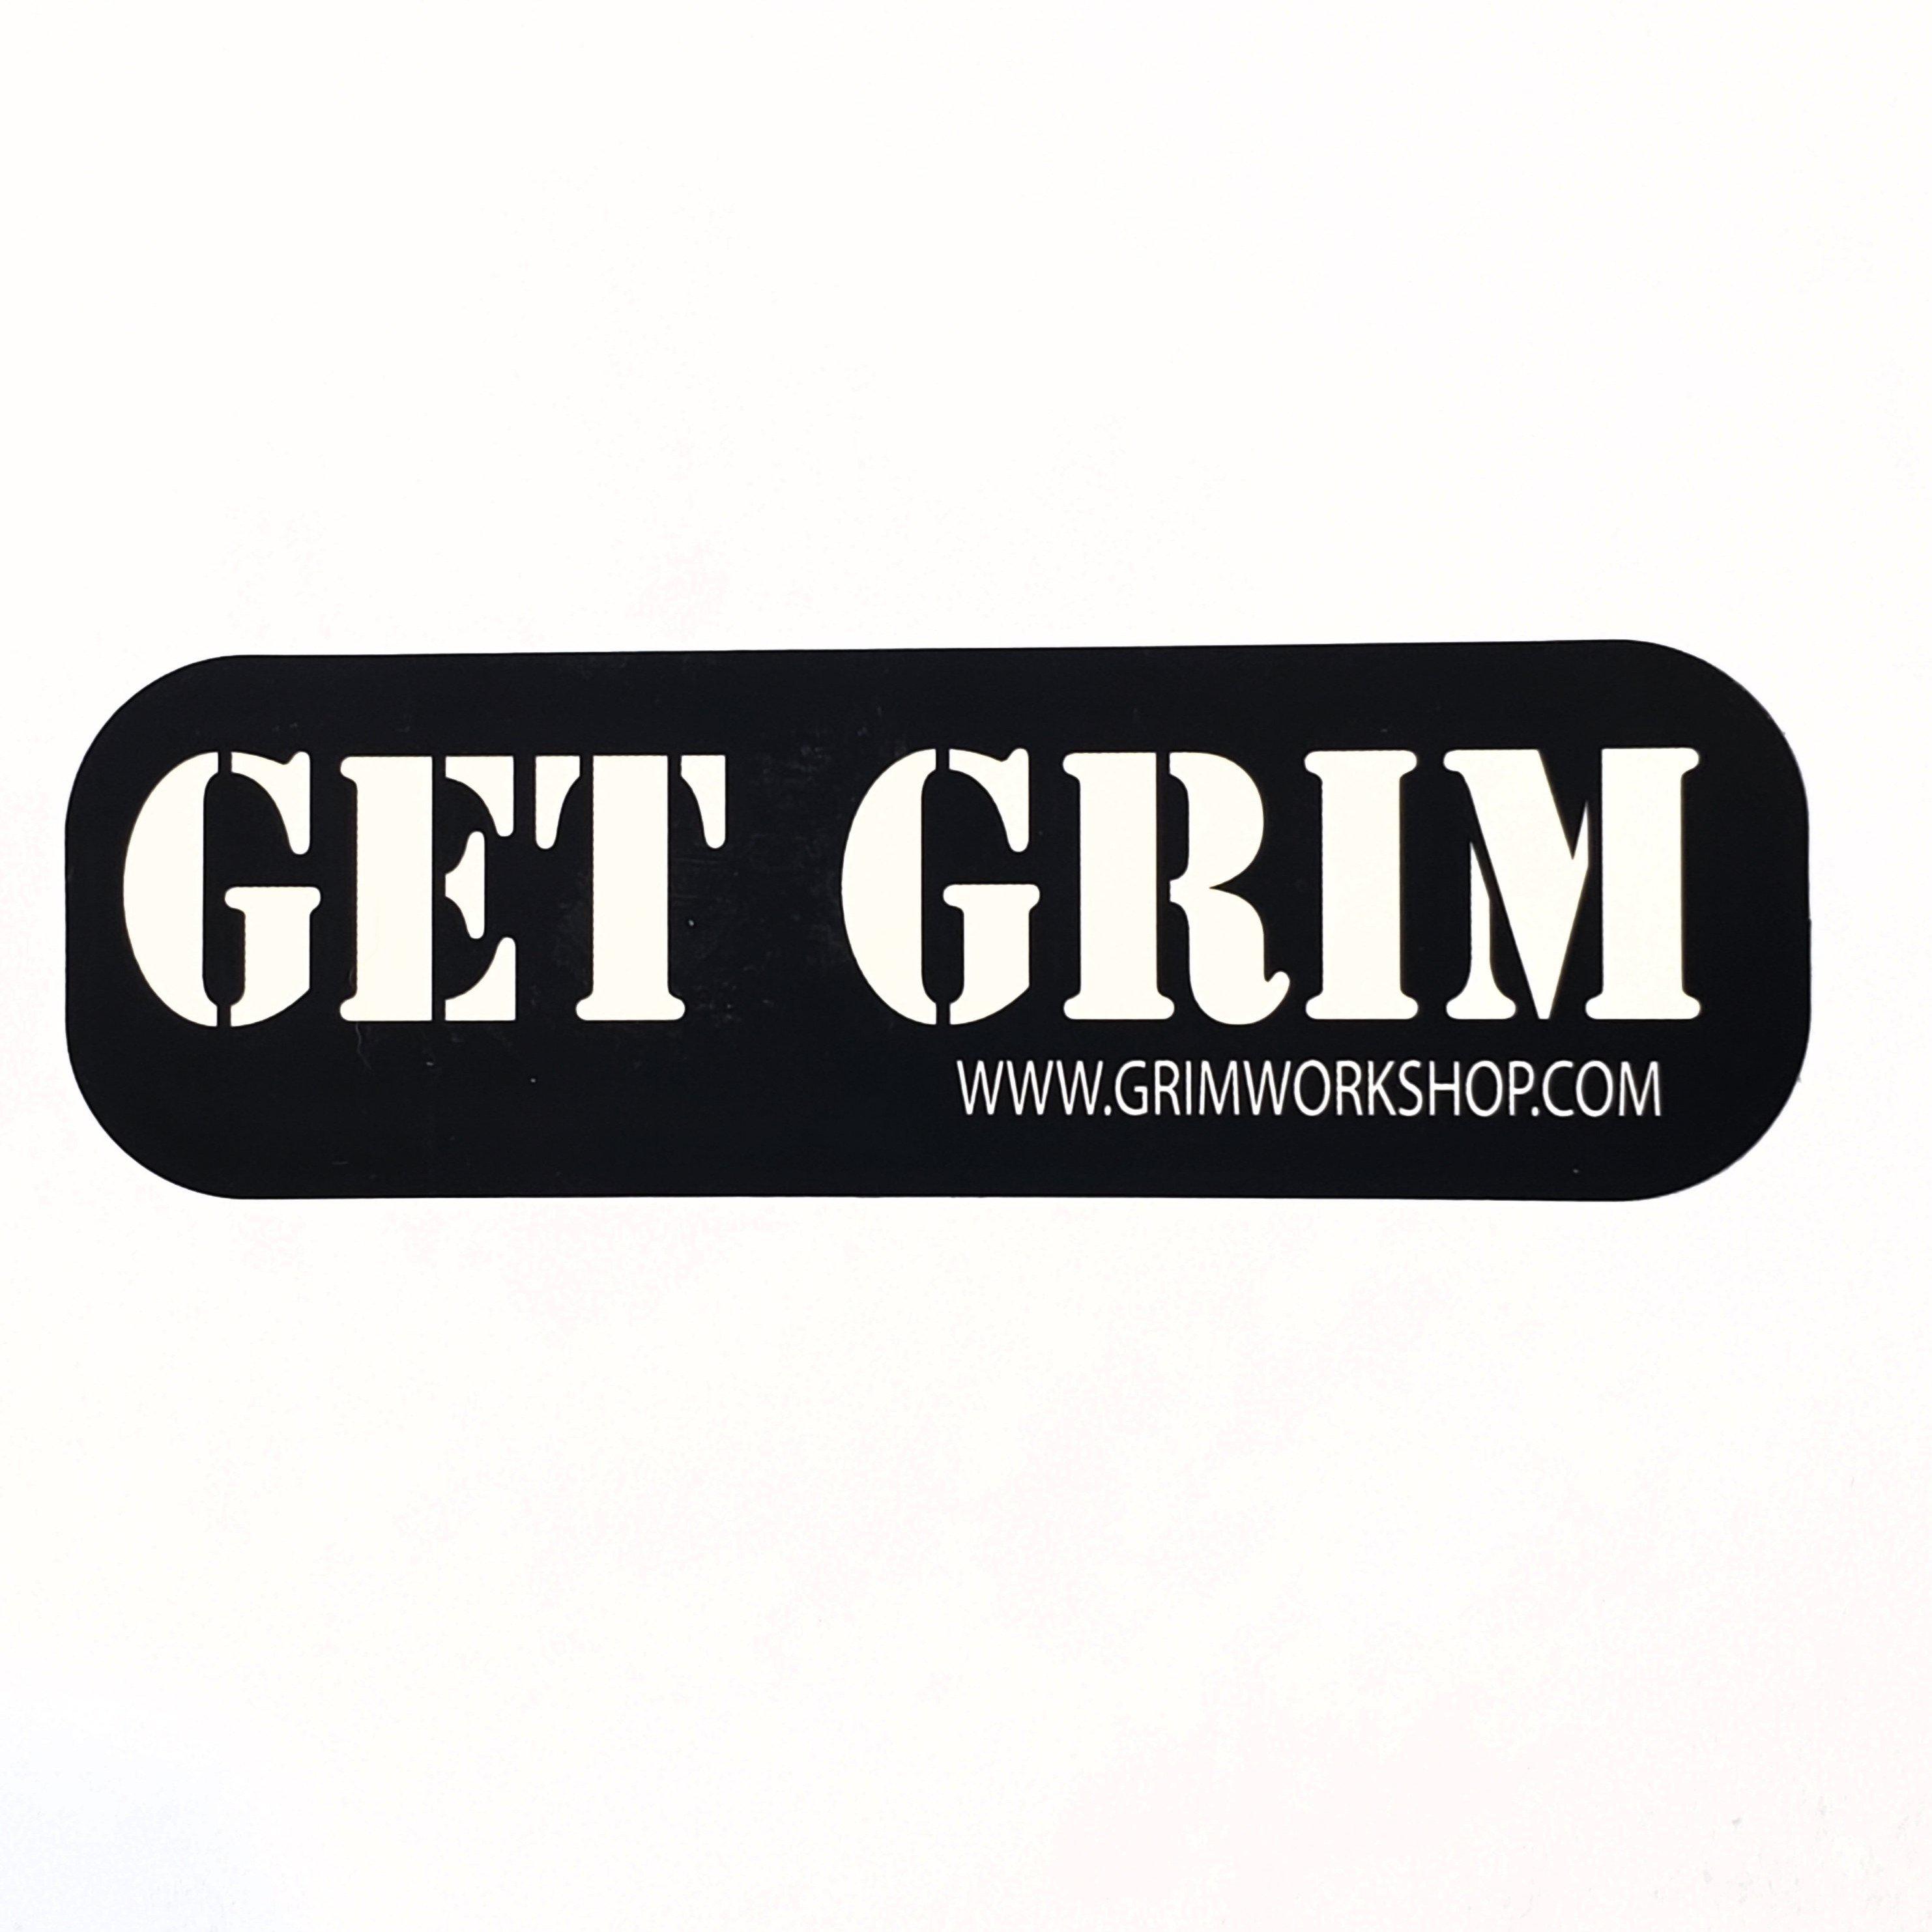 Get Grim Sticker-Grimworkshop-bugoutbag-bushcraft-edc-gear-edctool-everydaycarry-survivalcard-survivalkit-wilderness-prepping-toolkit